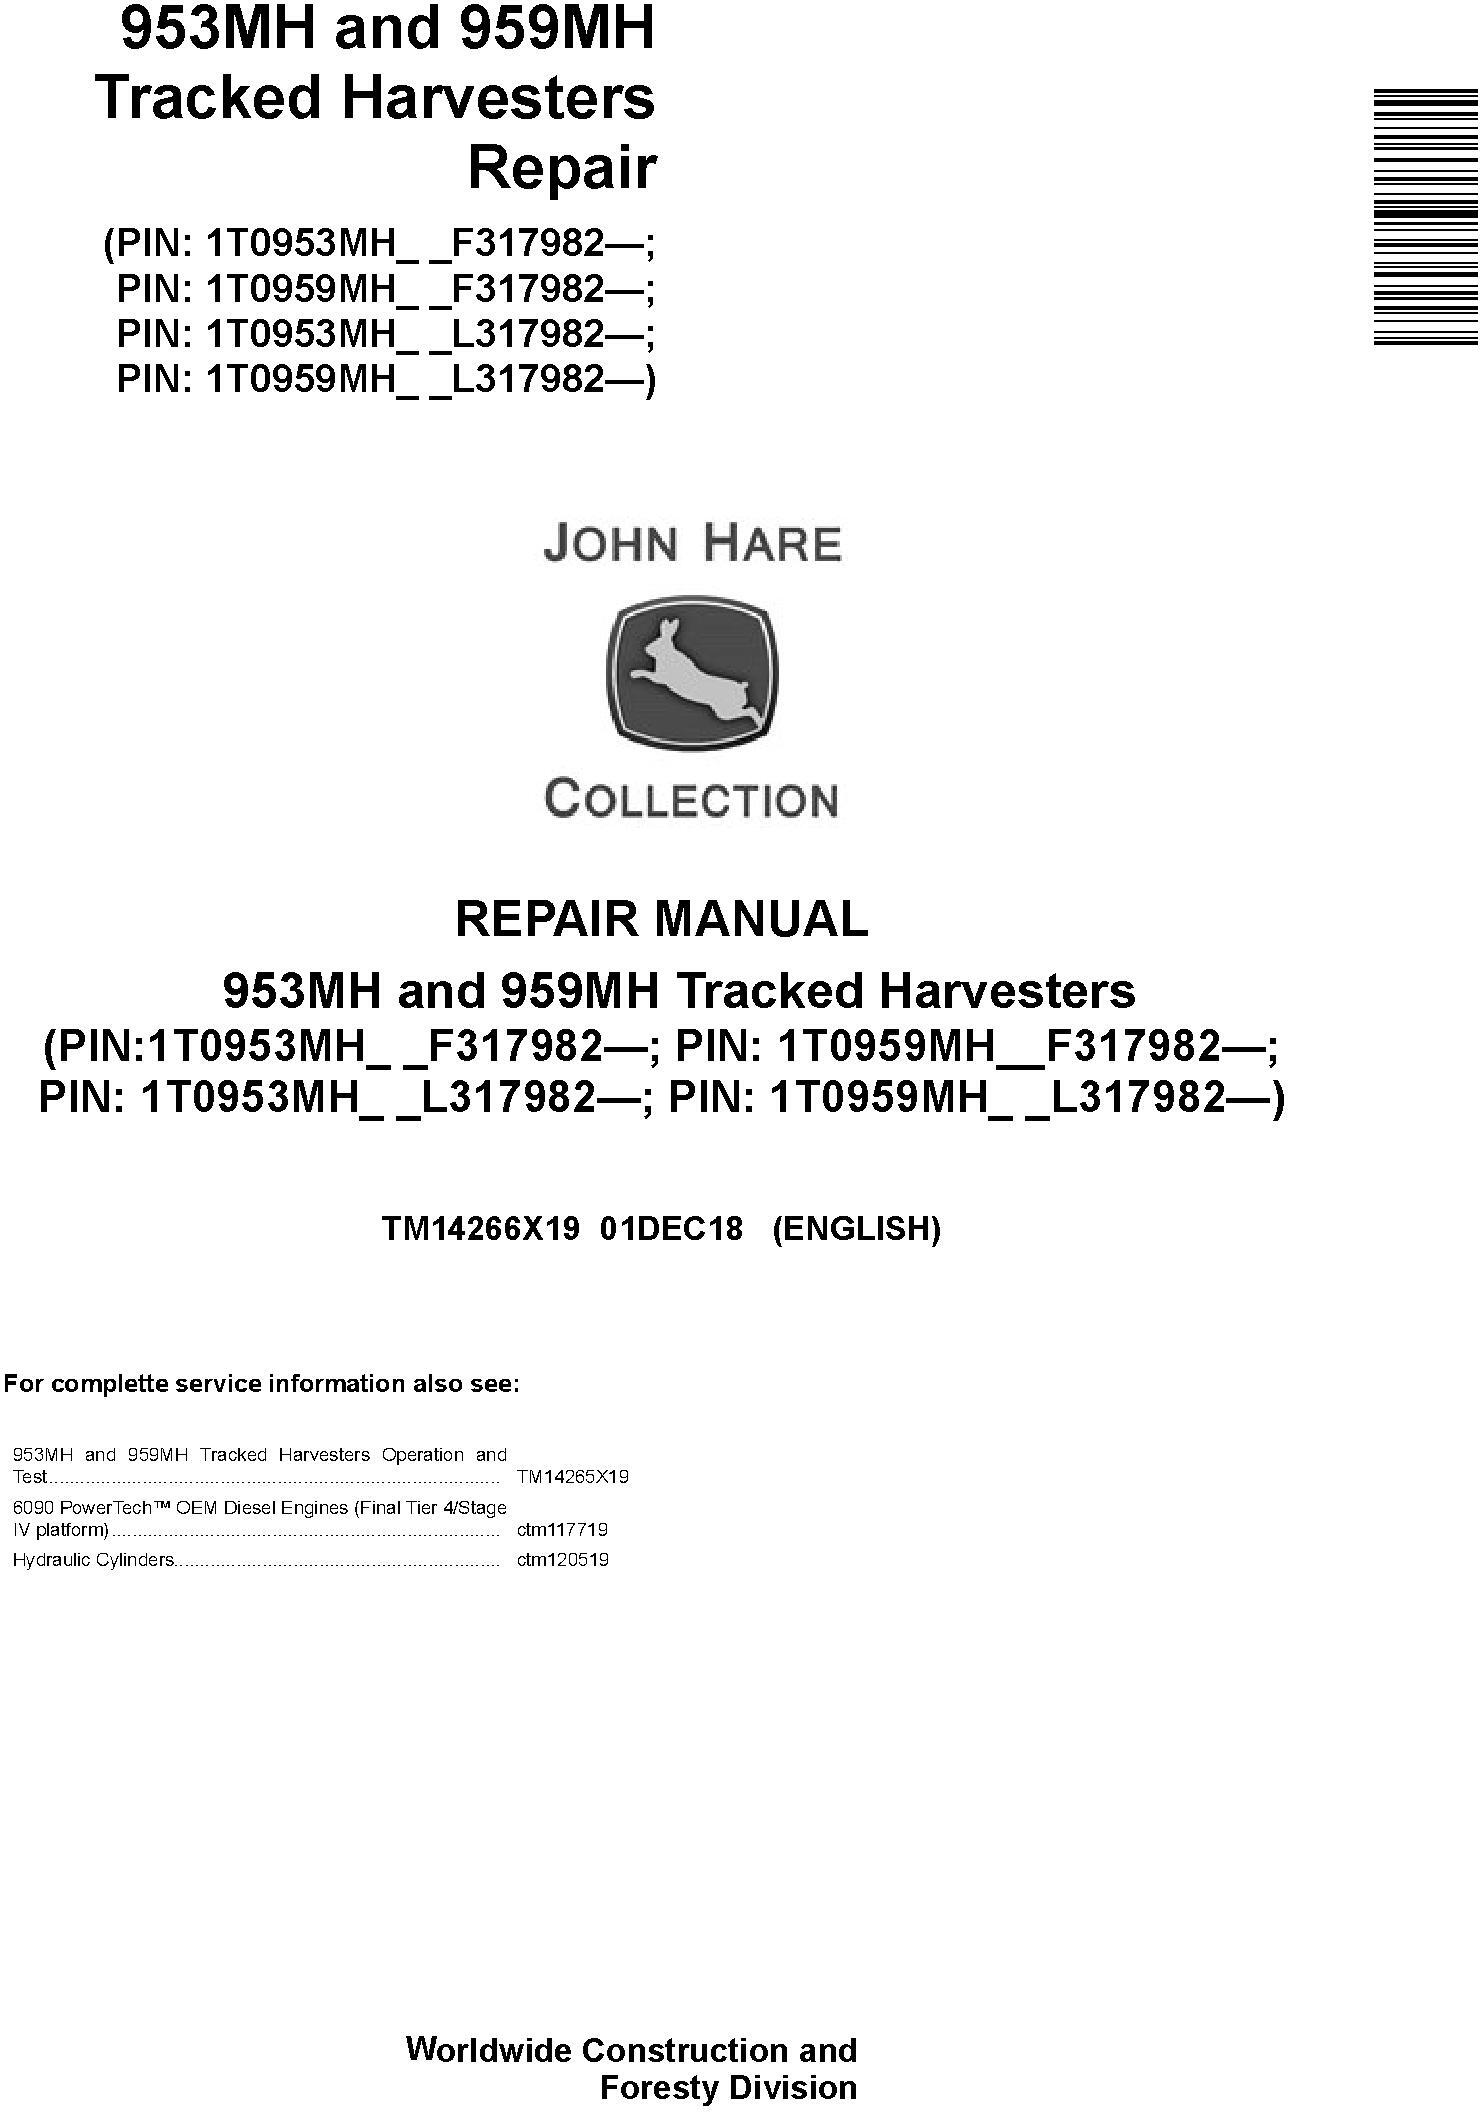 John Deere 953MH, 959MH (SN.F317982-,L317982-) Tracked Harvesters Service Repair Manual (TM14266X19) - 19180